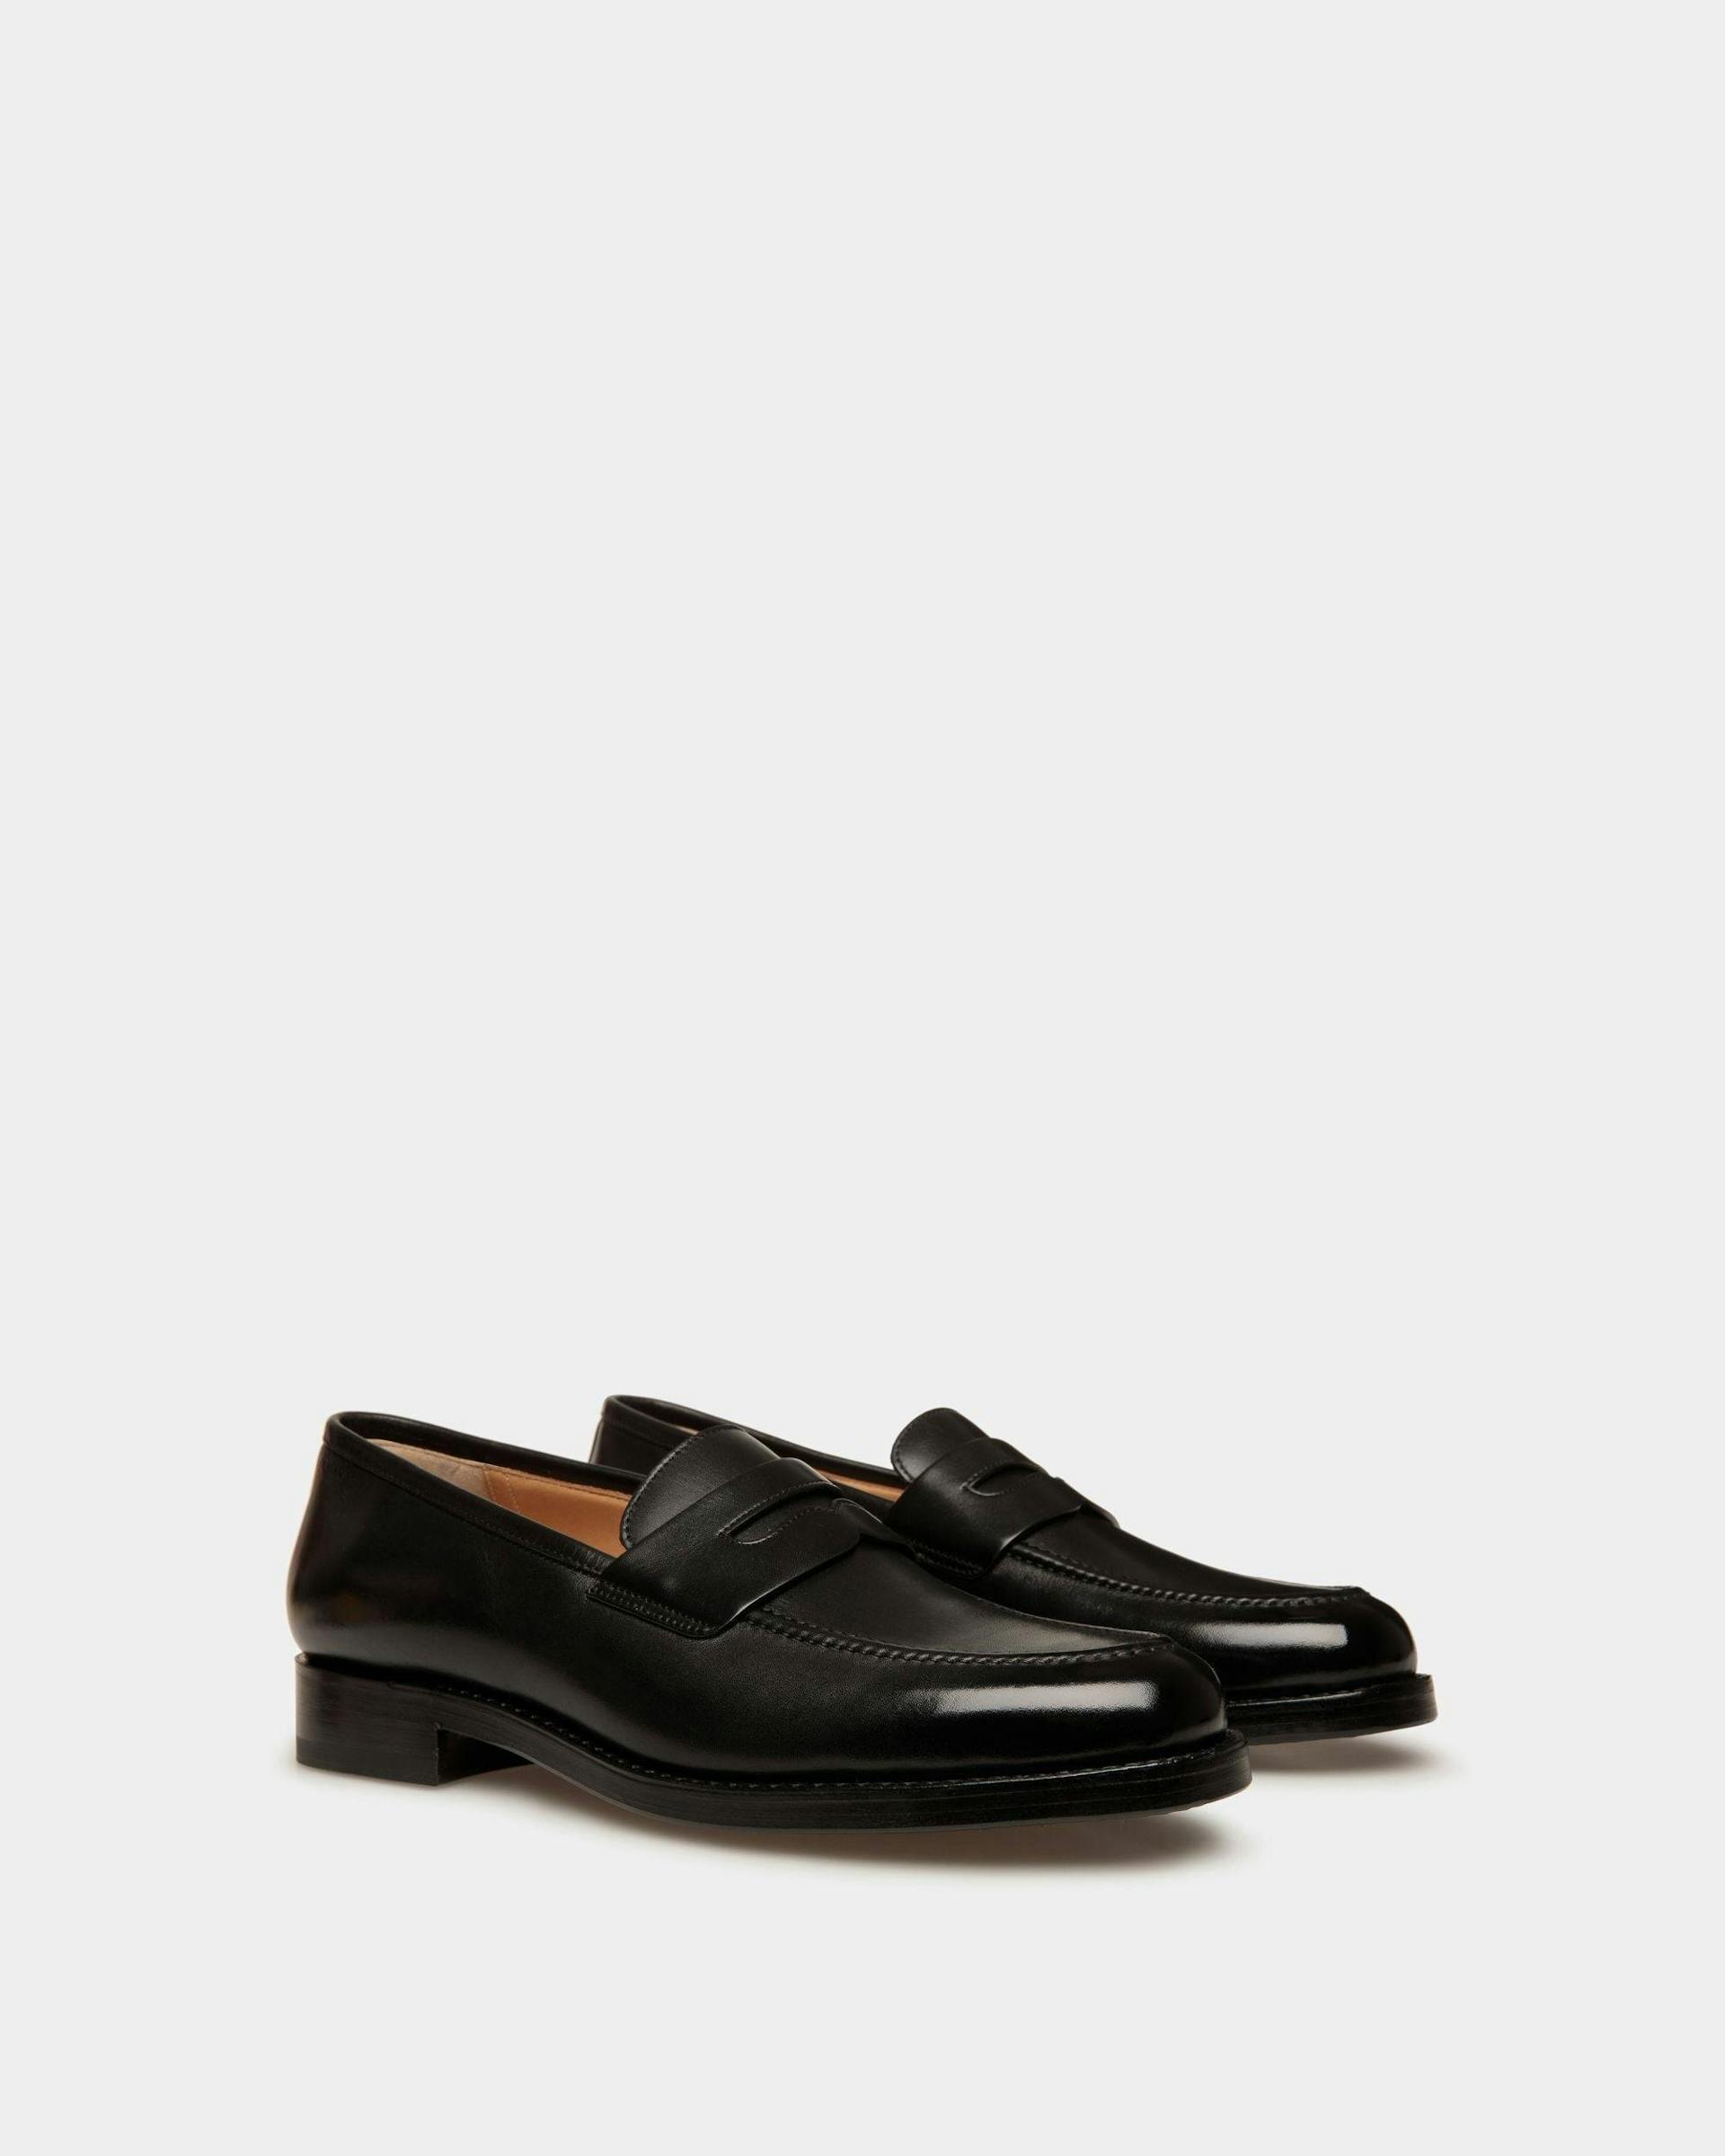 Men's Schoenen Loafer In Black Leather | Bally | Still Life 3/4 Front